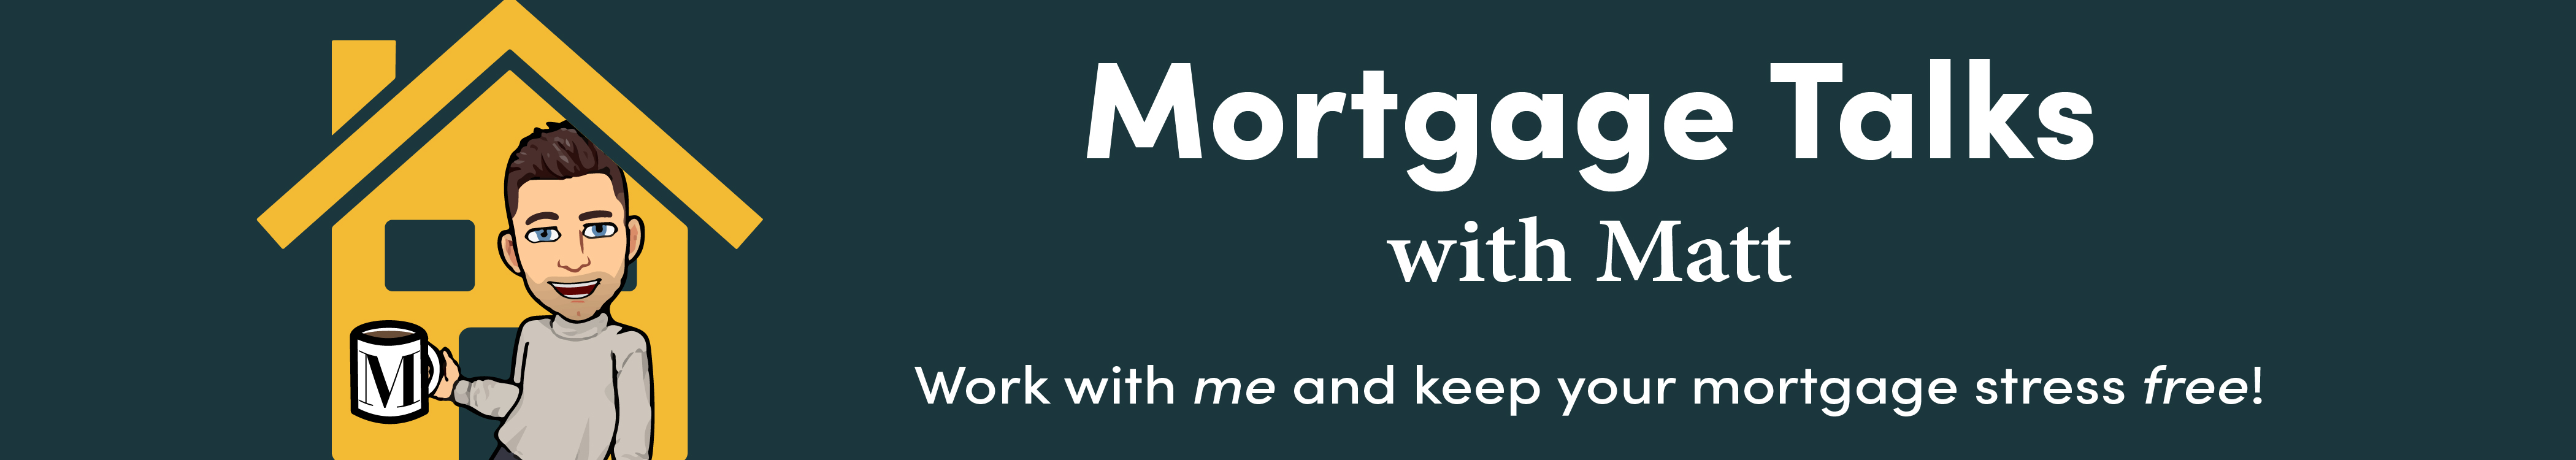 Mortgage talks with Matt